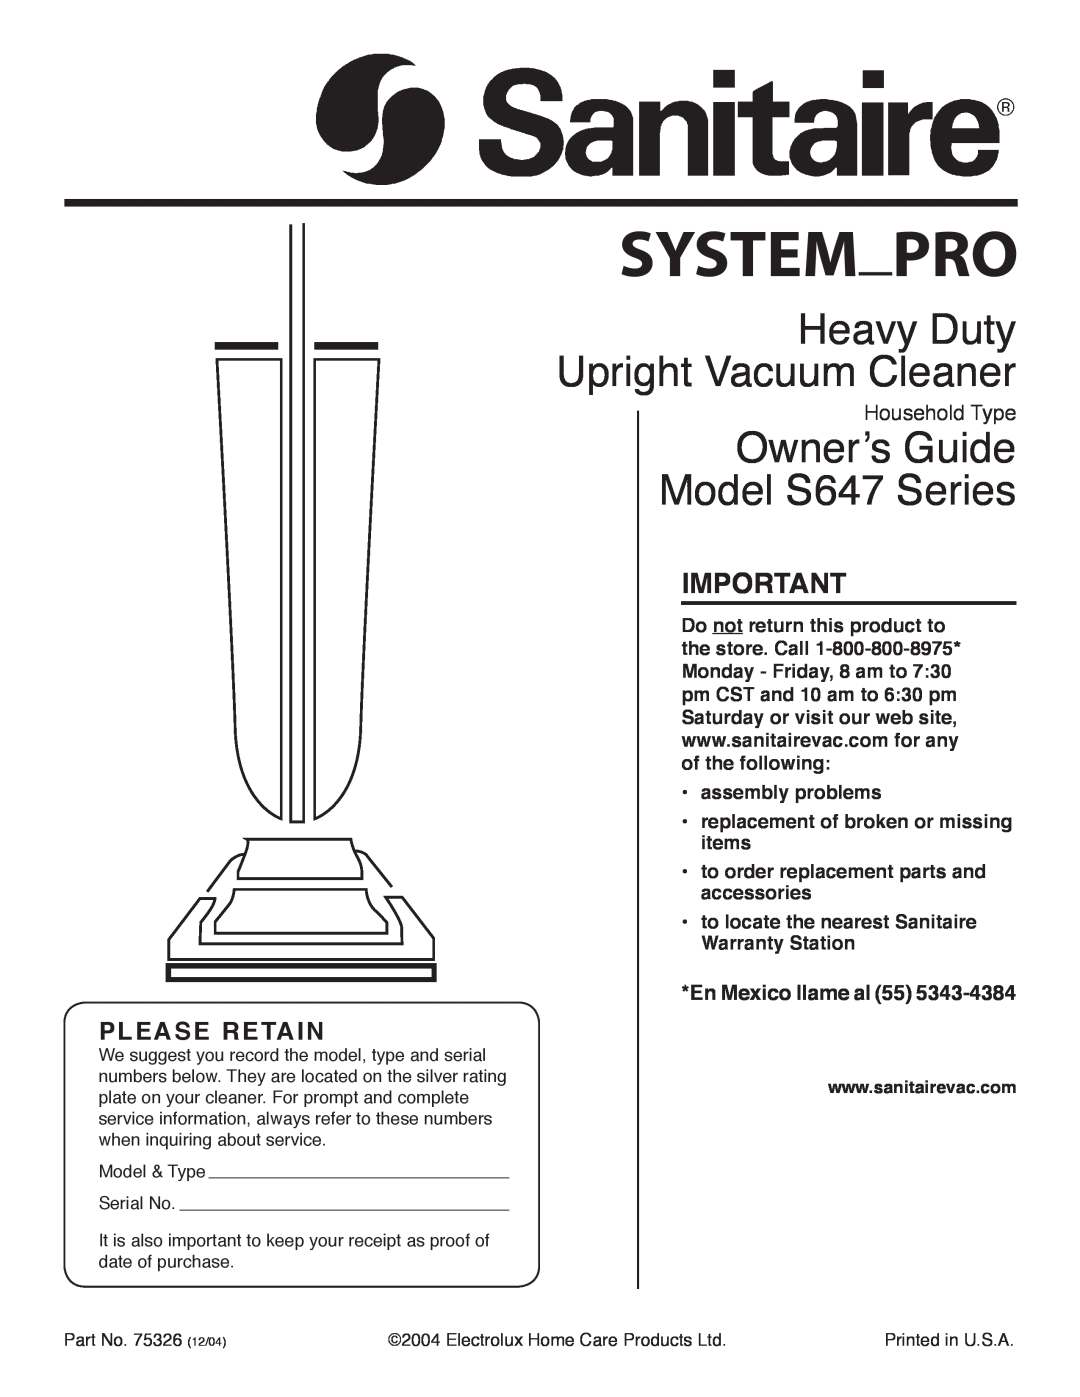 Sanitaire warranty En Mexico llame al, Heavy Duty Upright Vacuum Cleaner, Ownerʼs Guide Model S647 Series 